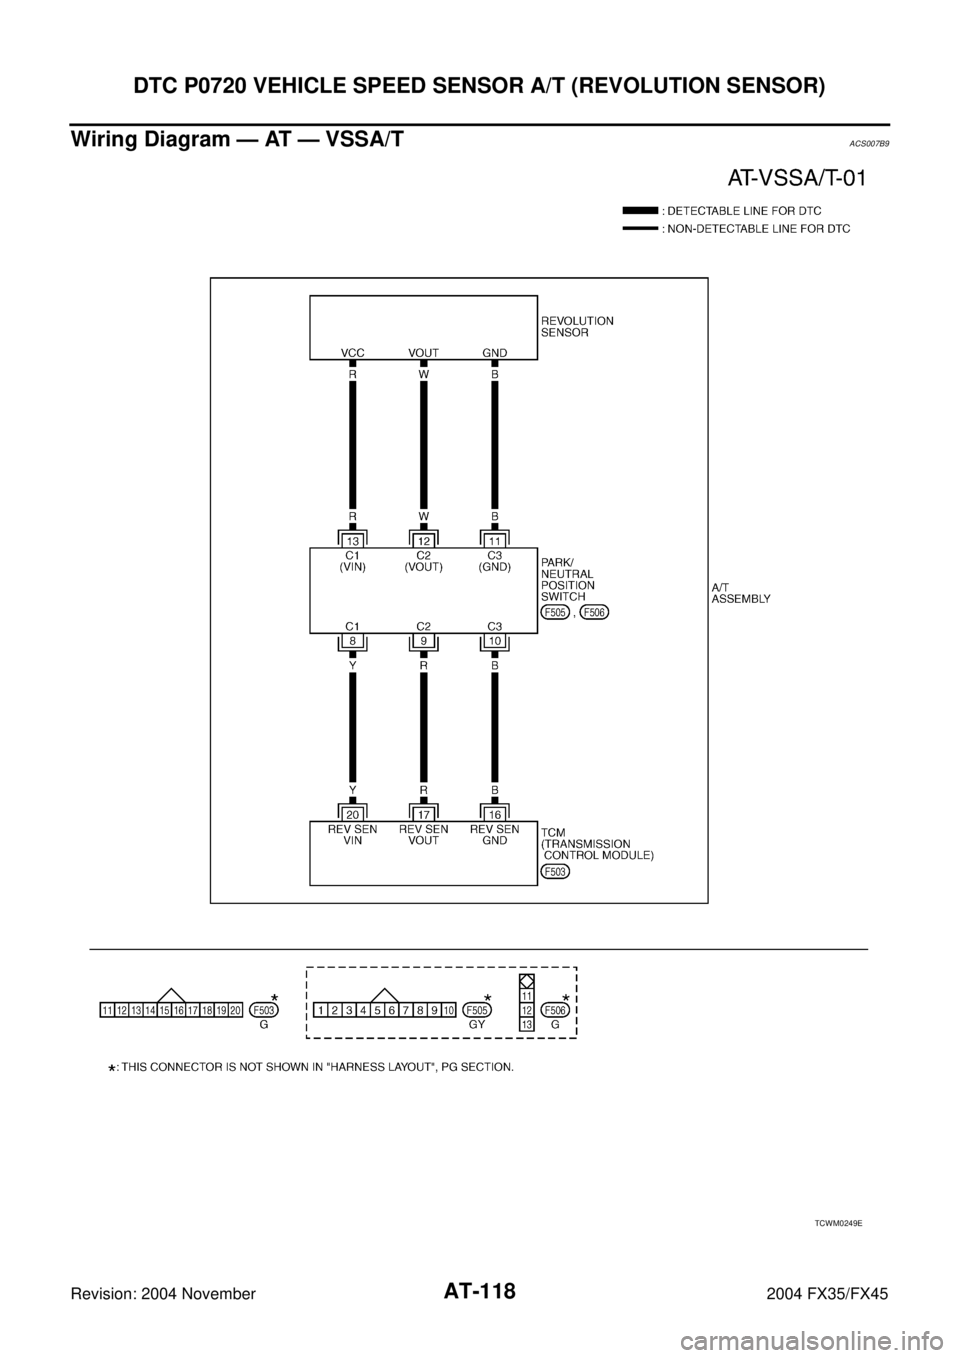 INFINITI FX35 2004  Service Manual AT-118
DTC P0720 VEHICLE SPEED SENSOR A/T (REVOLUTION SENSOR)
Revision: 2004 November 2004 FX35/FX45
Wiring Diagram — AT — VSSA/TACS007B9
TCWM0249E 